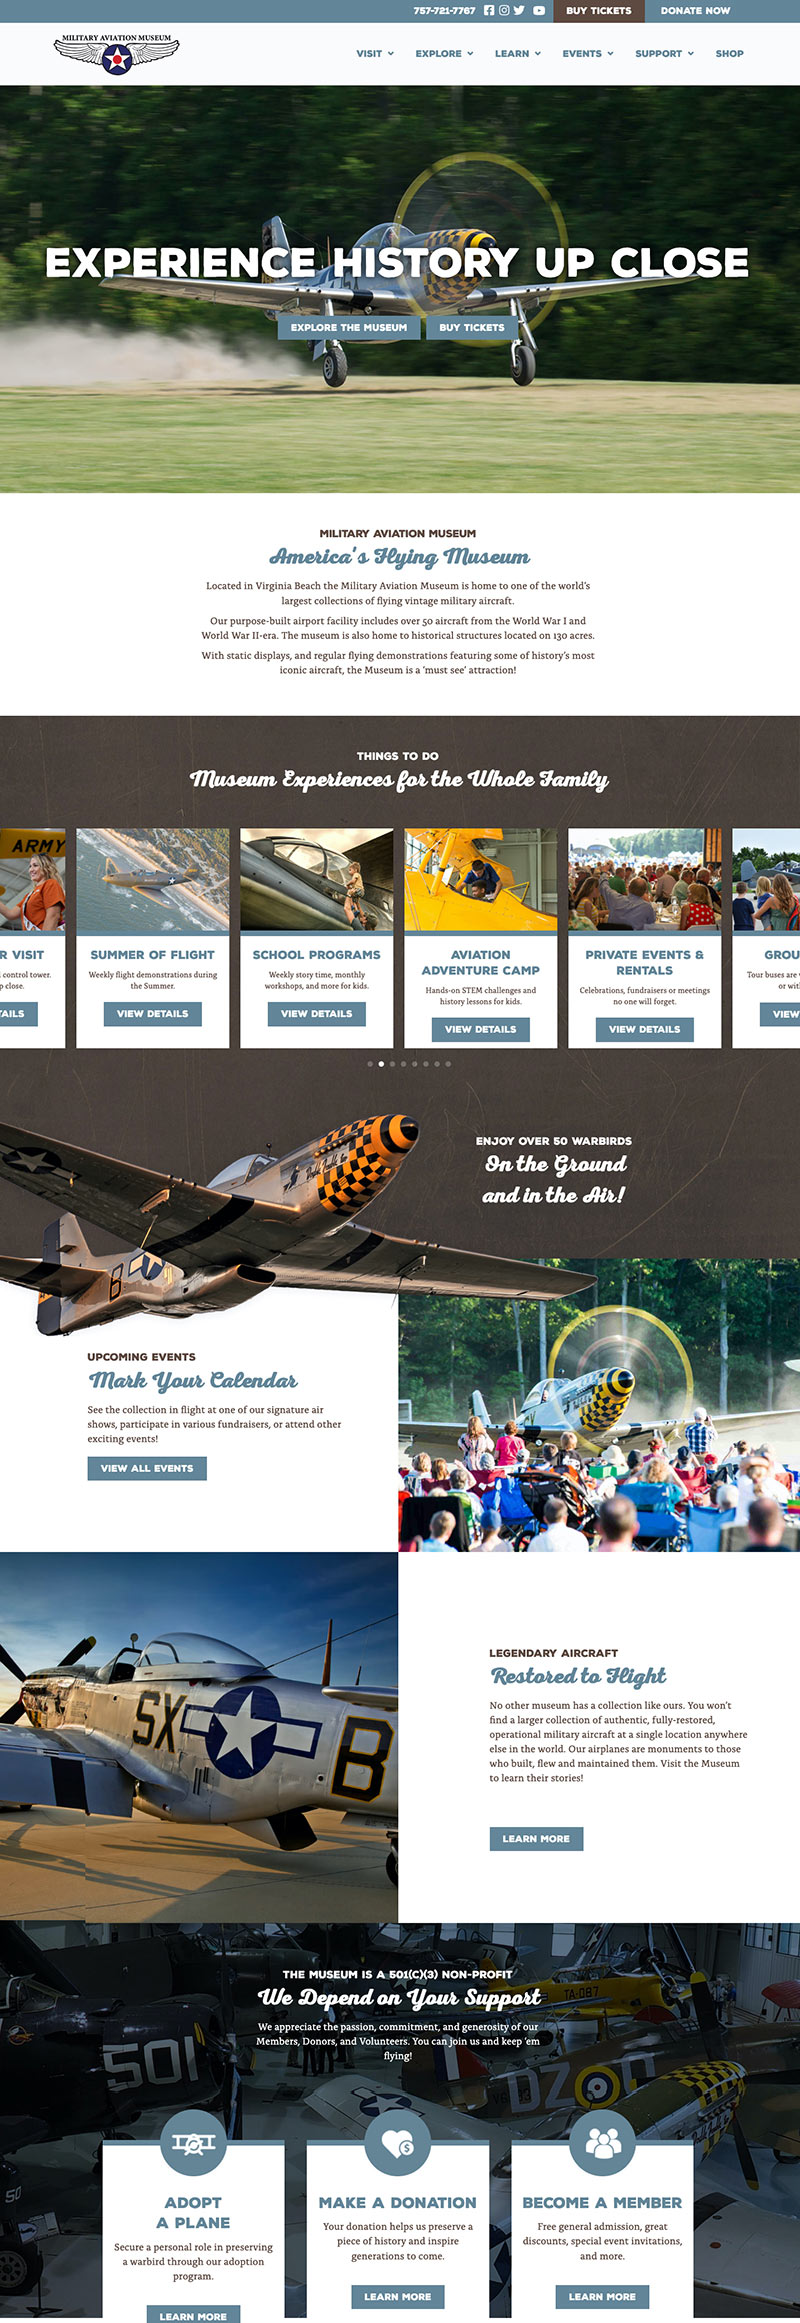 Military Aviation Museum Website design